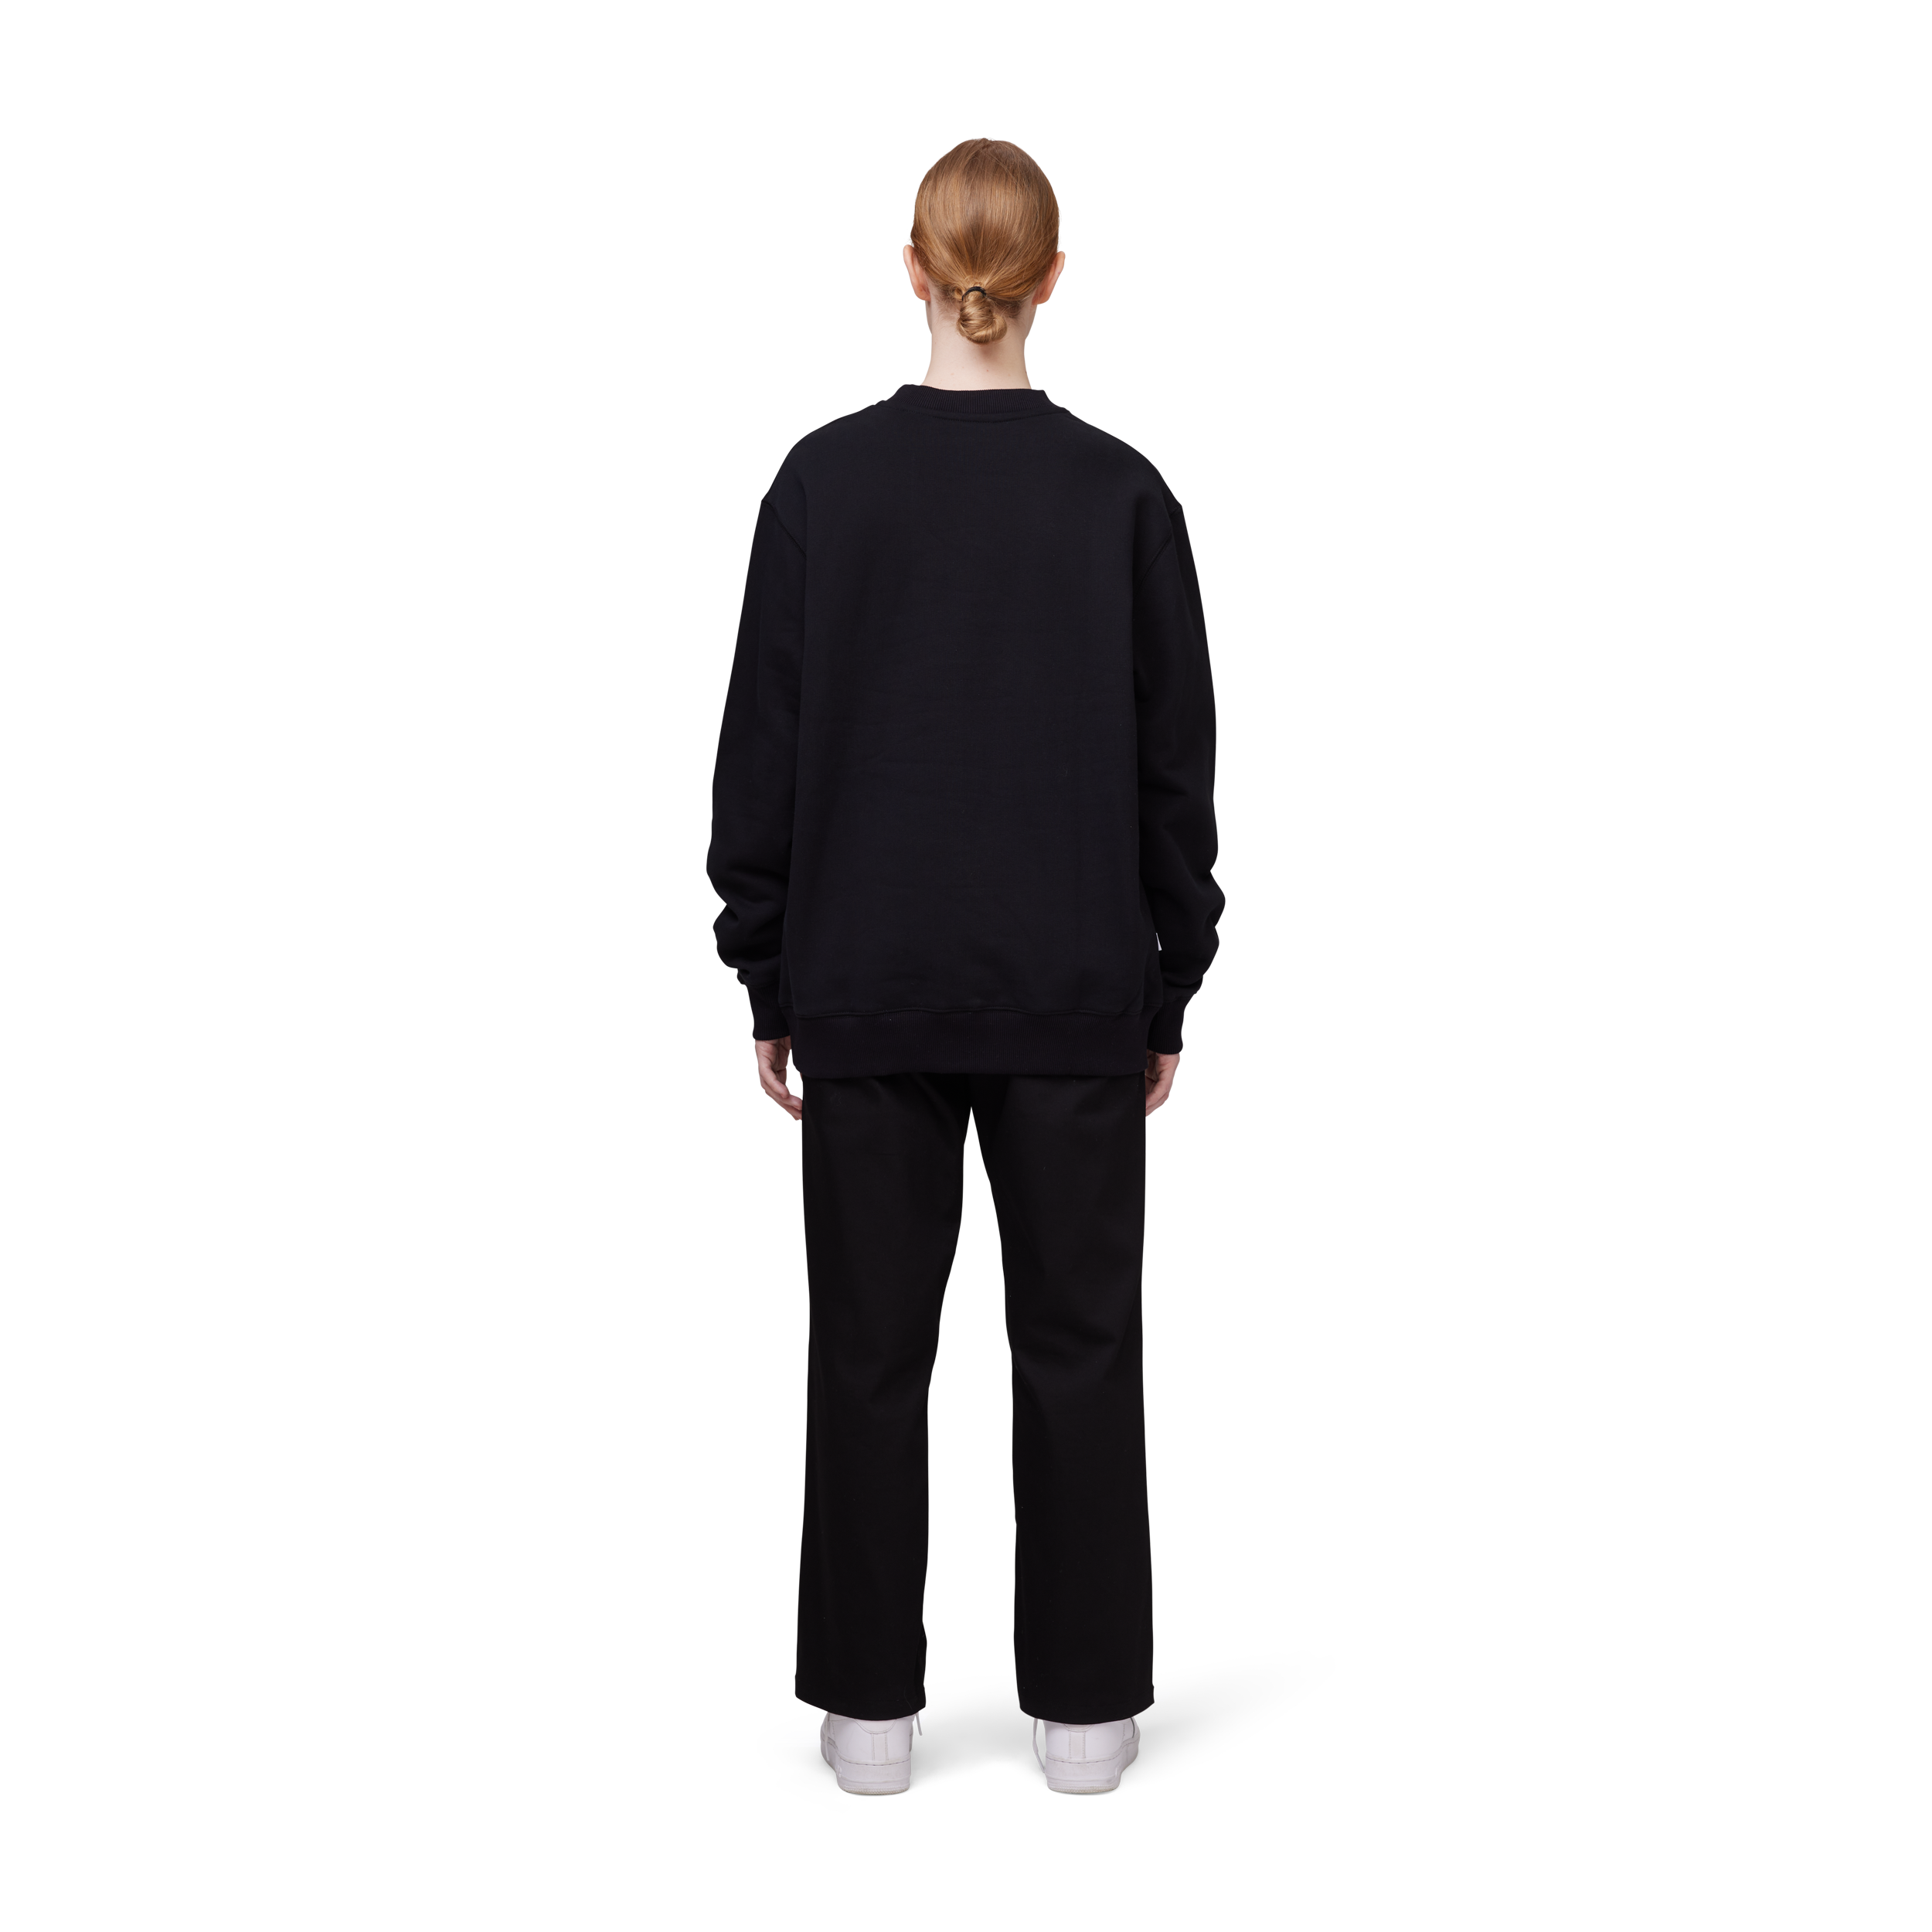 Flex Sweatshirt